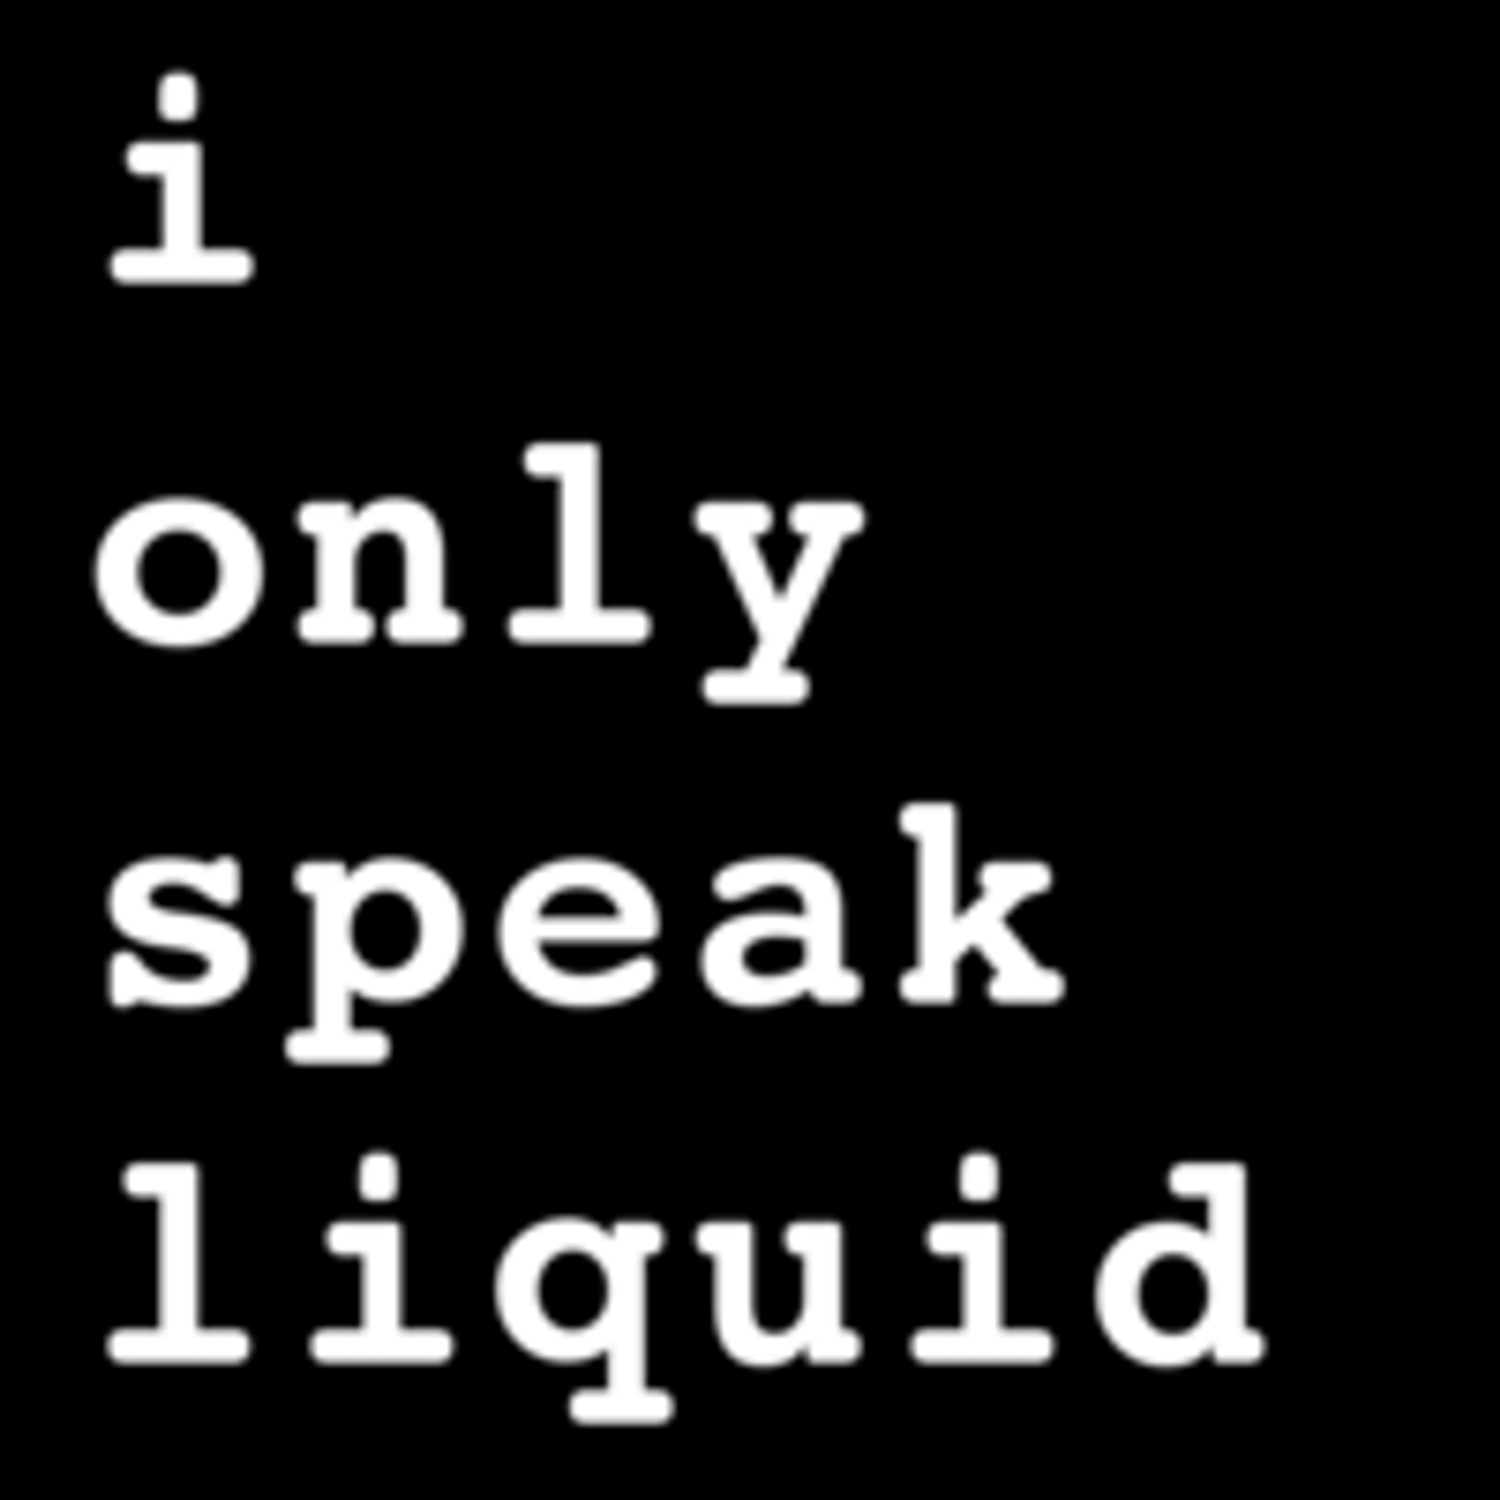 i only speak liquid